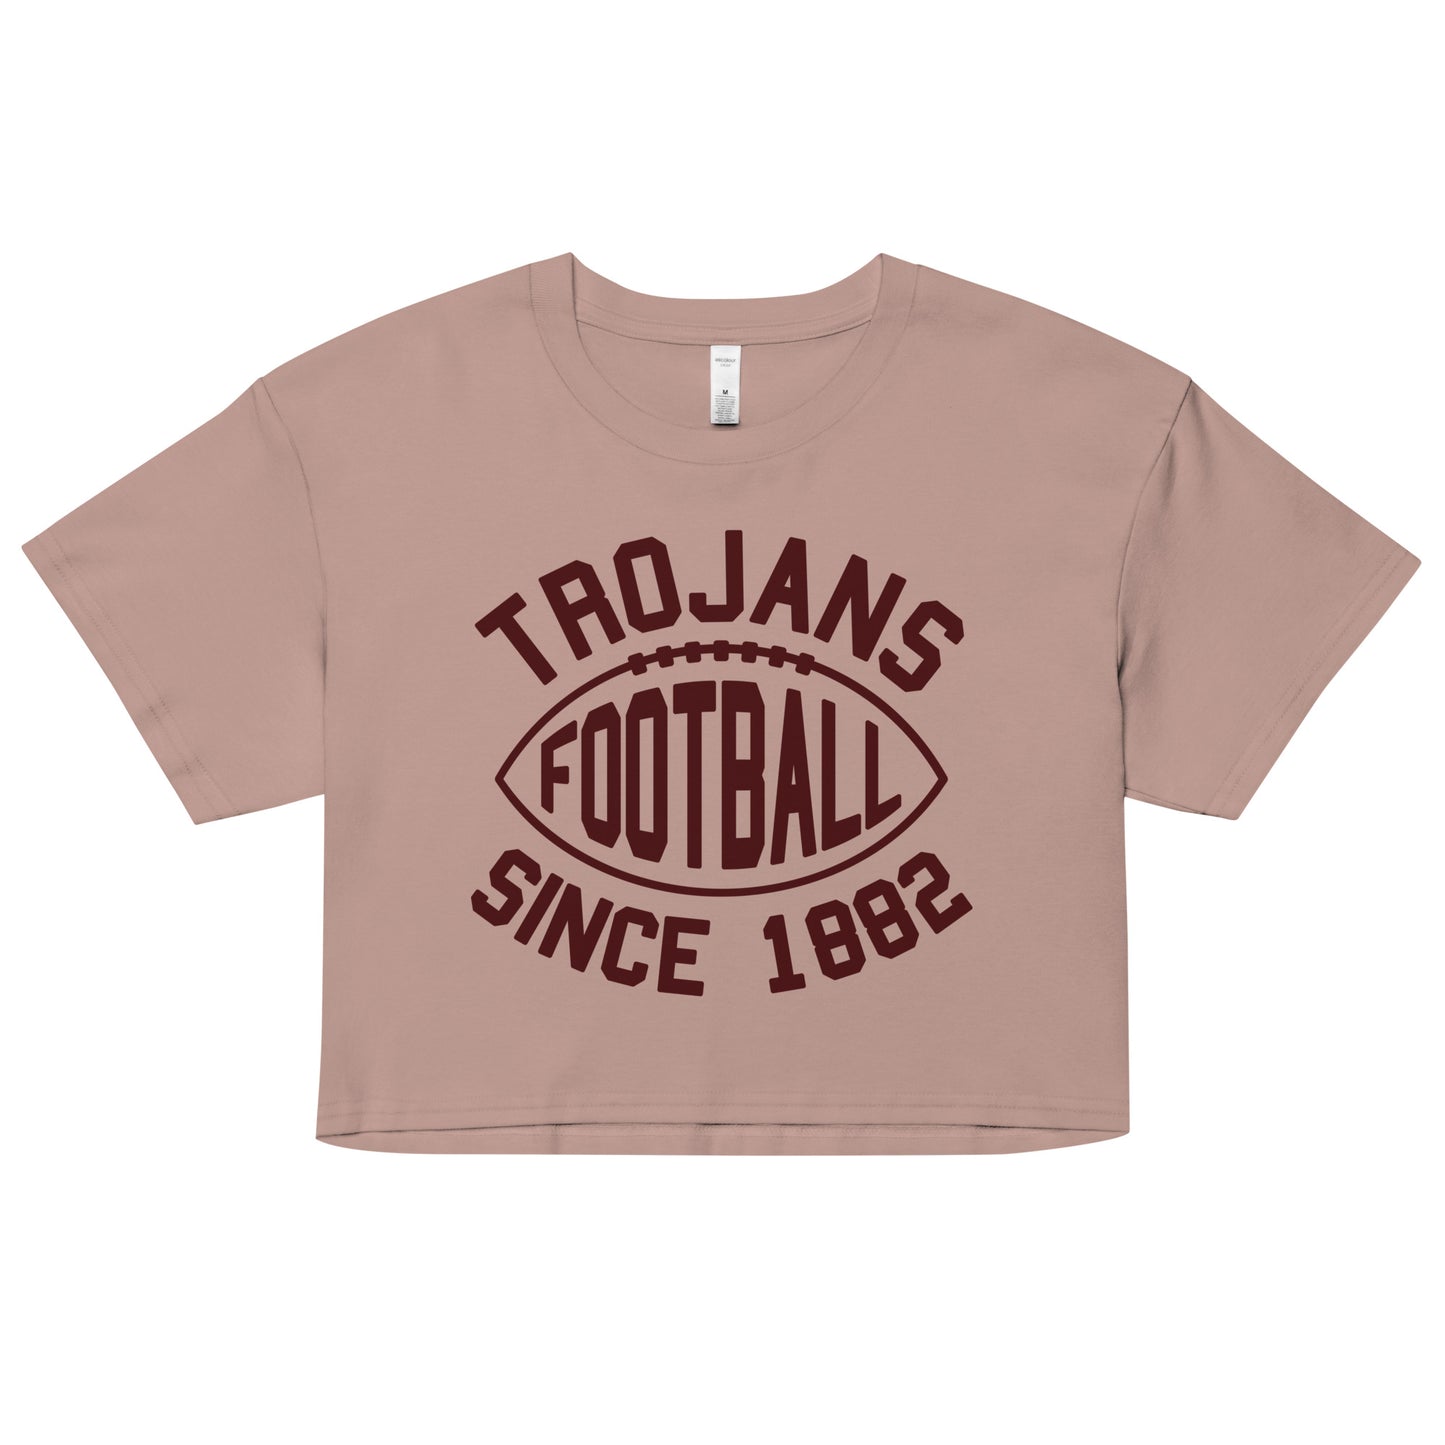 Trojans Football Cropped Tee